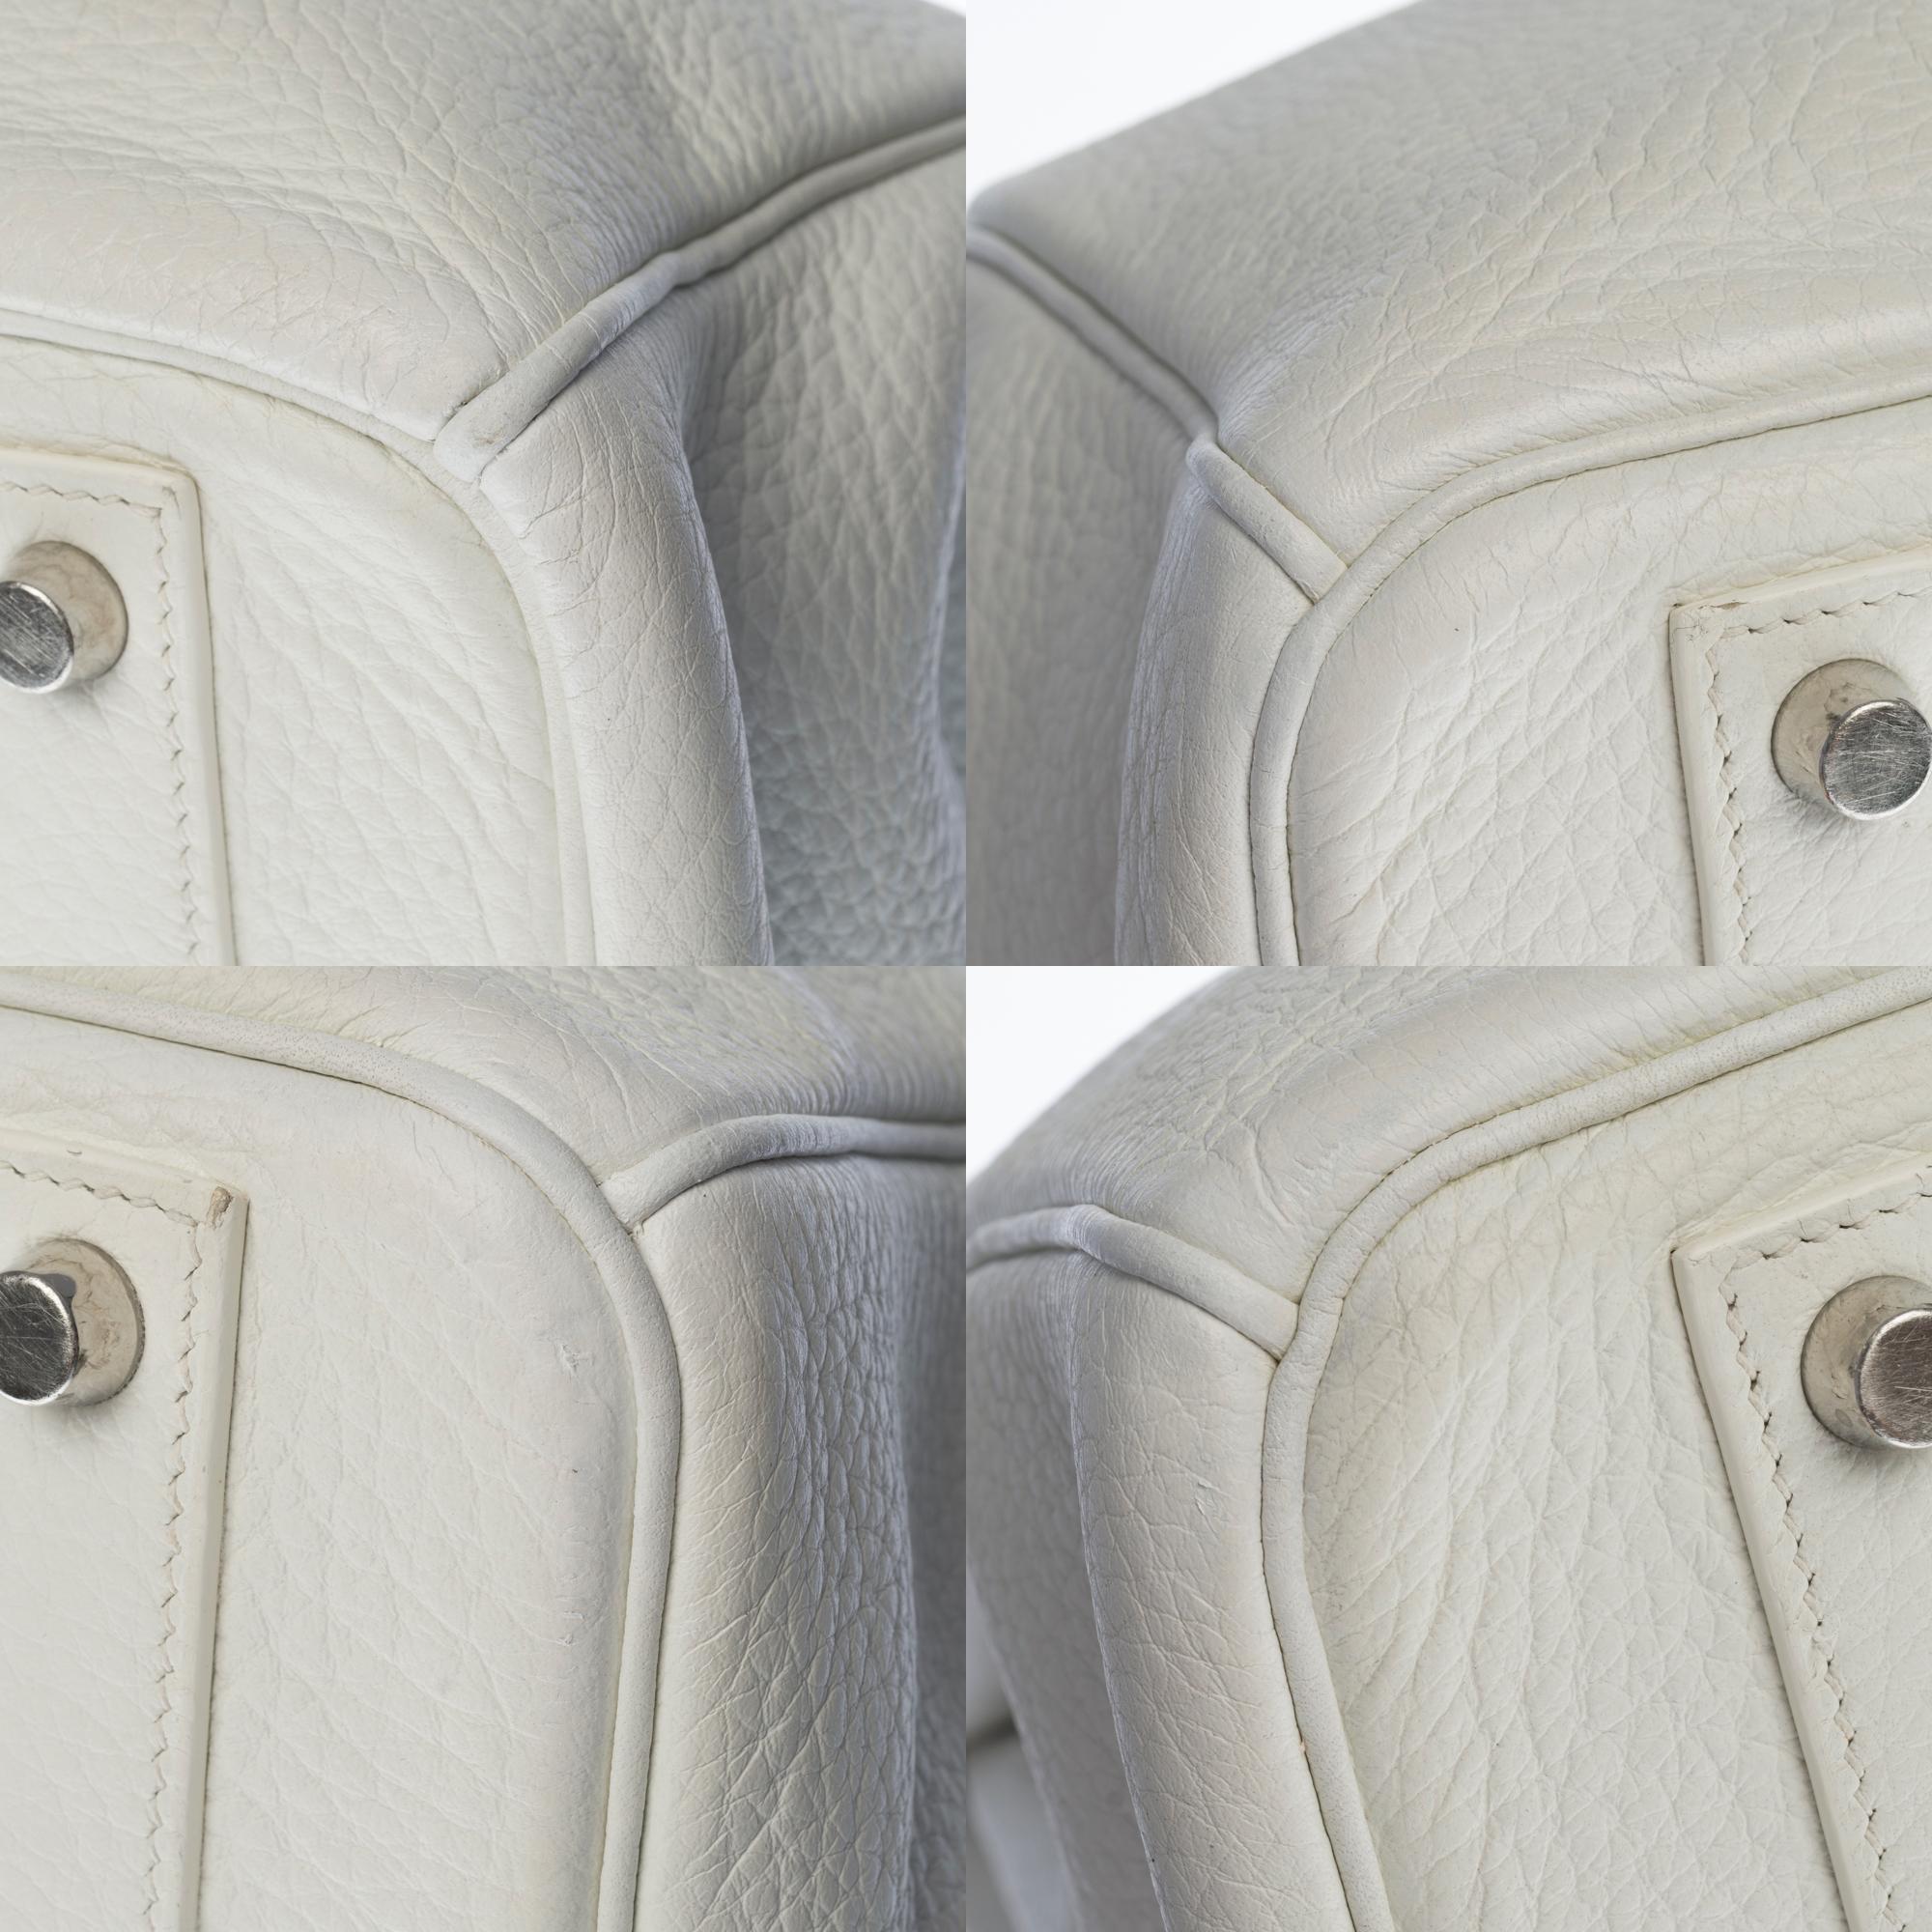 Stunning Hermes Birkin 40cm handbag in White Togo leather, SHW 5